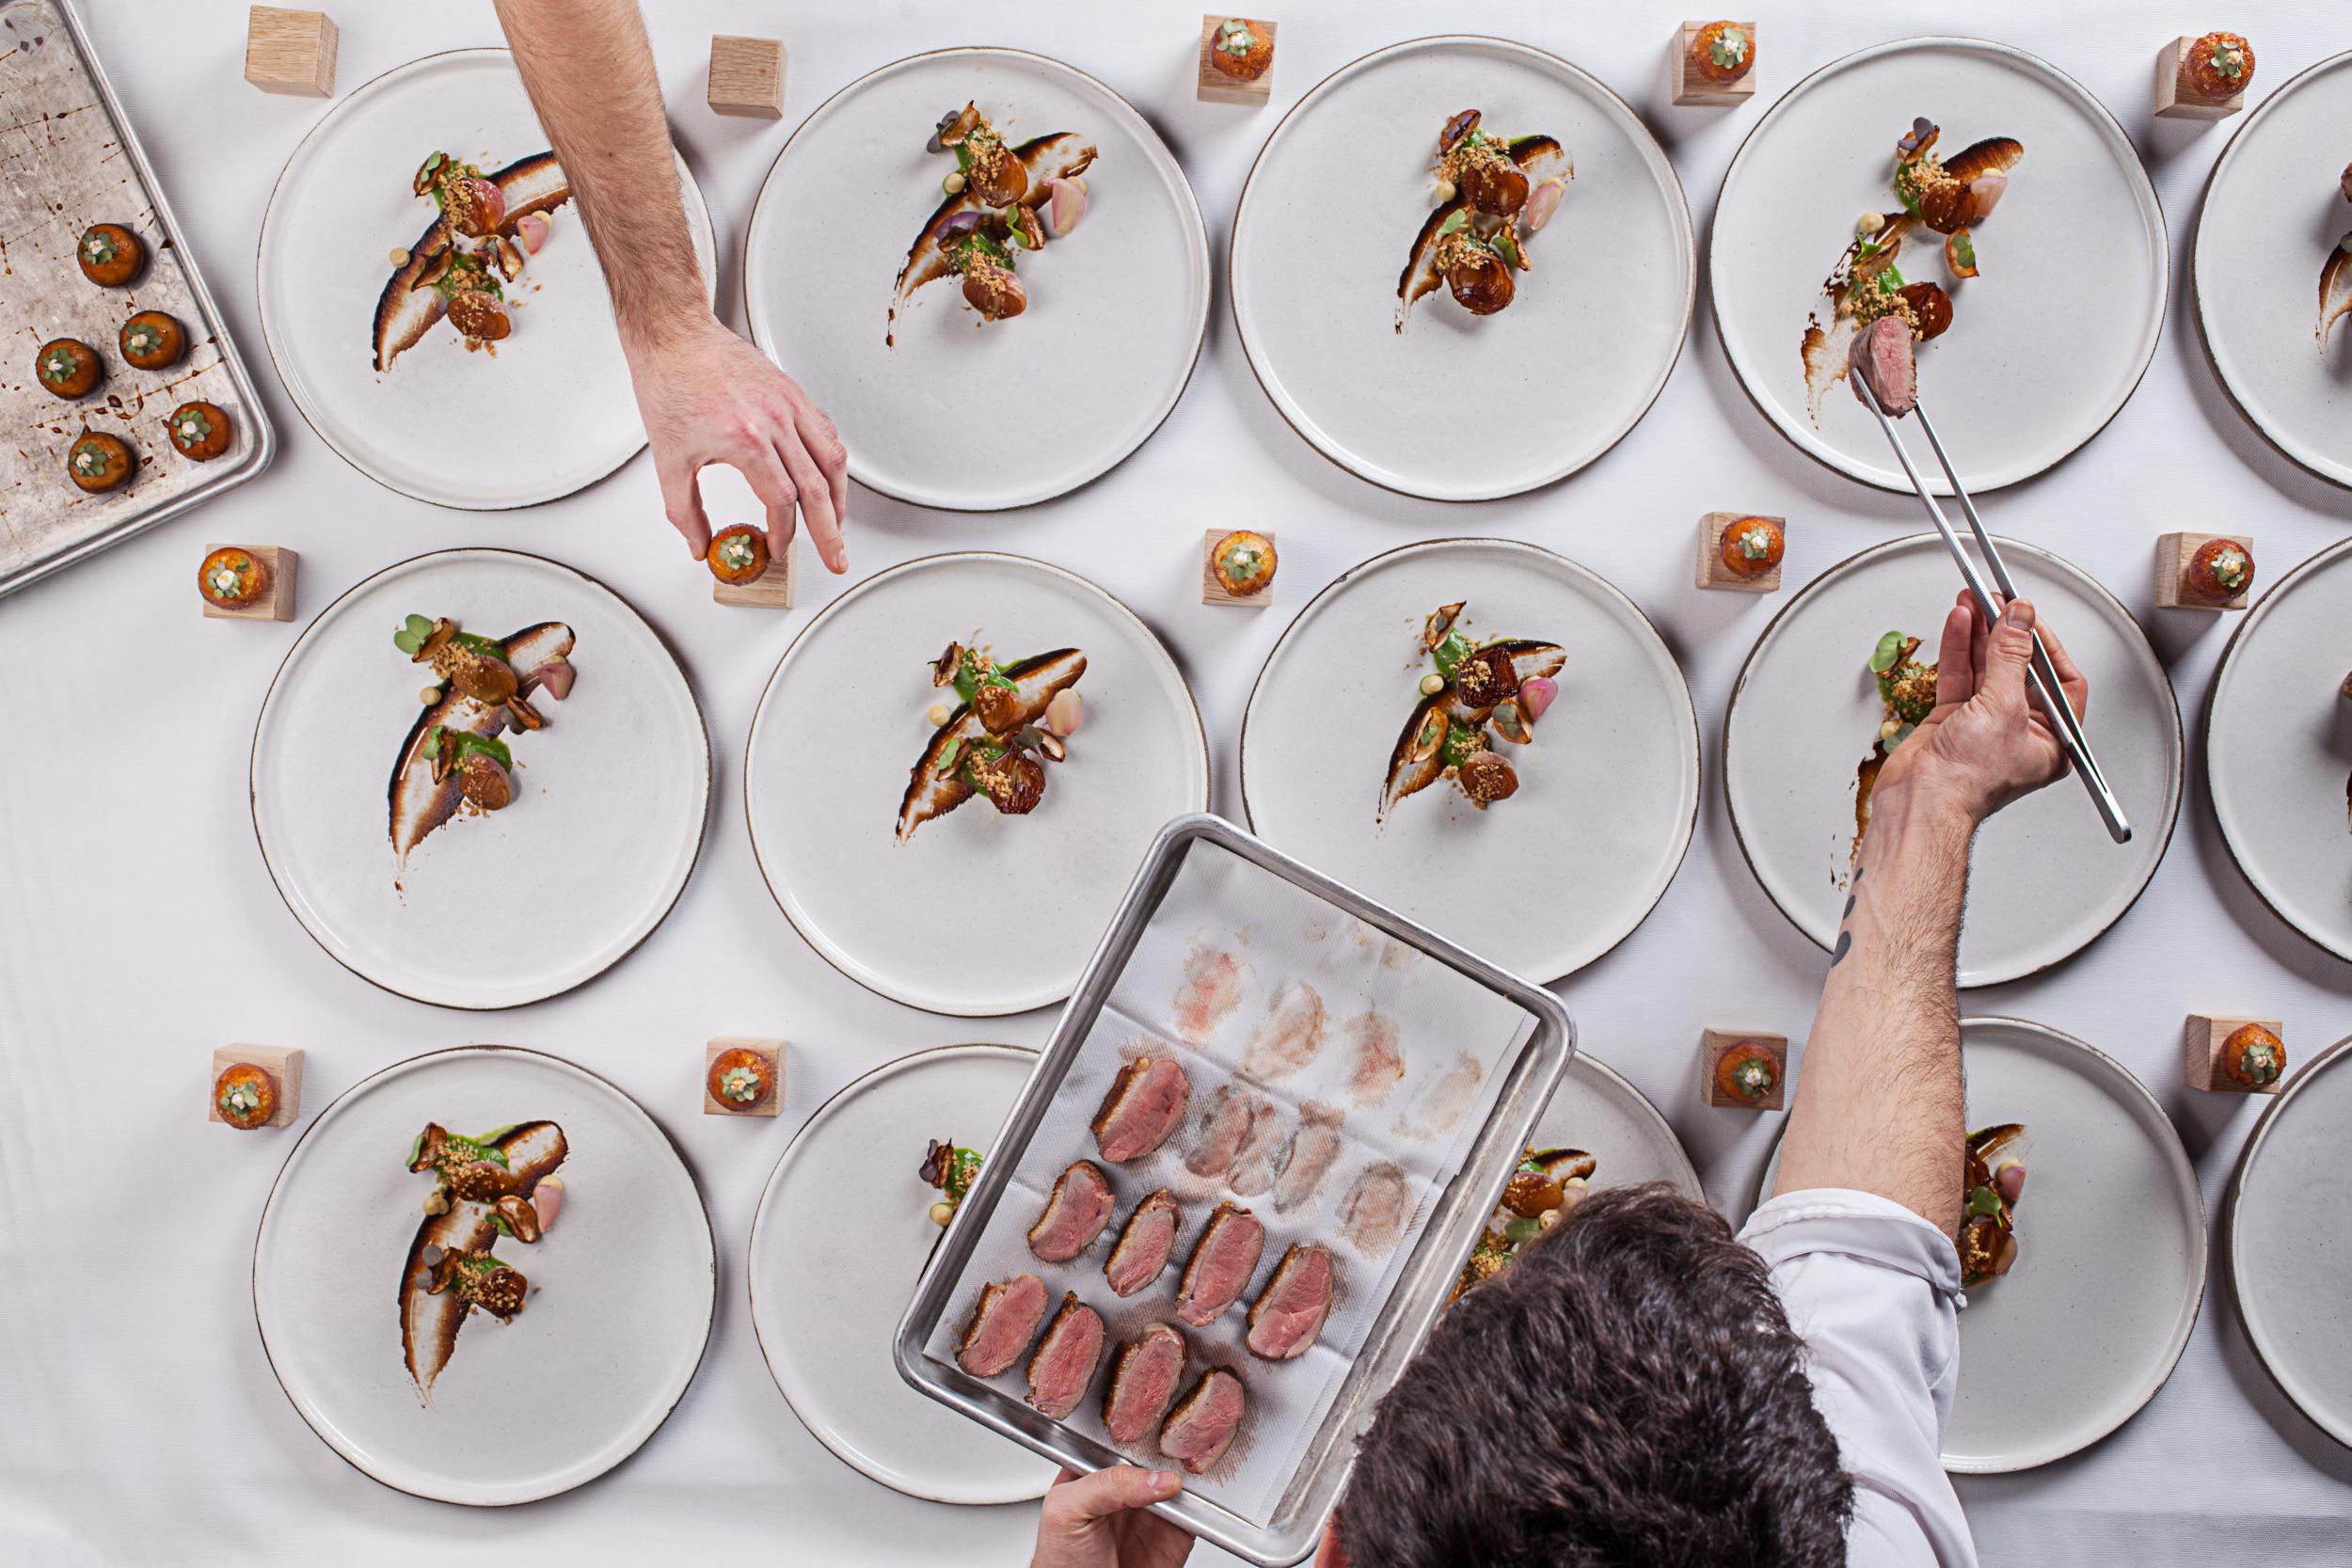 OCD serves a tasting menu for just 18 guests